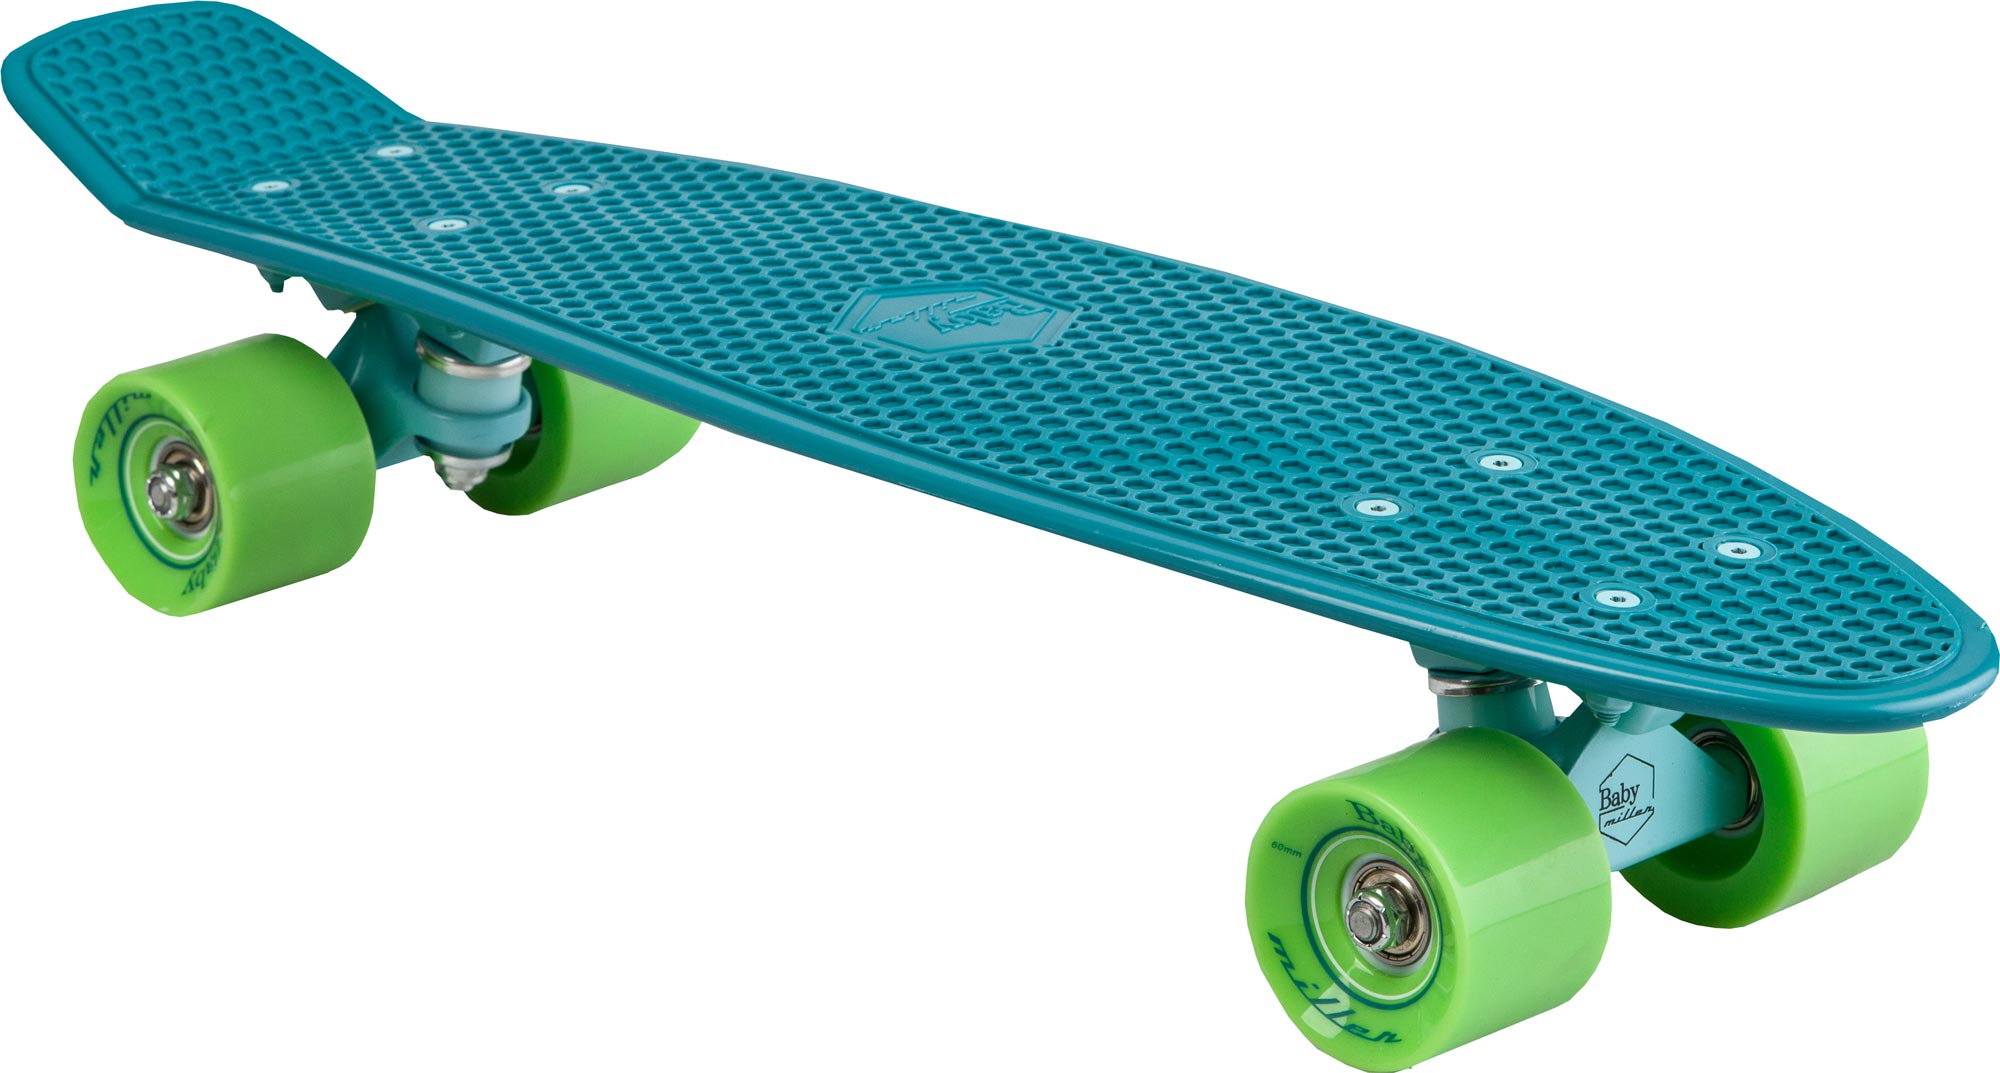 OCEAN - Skateboard